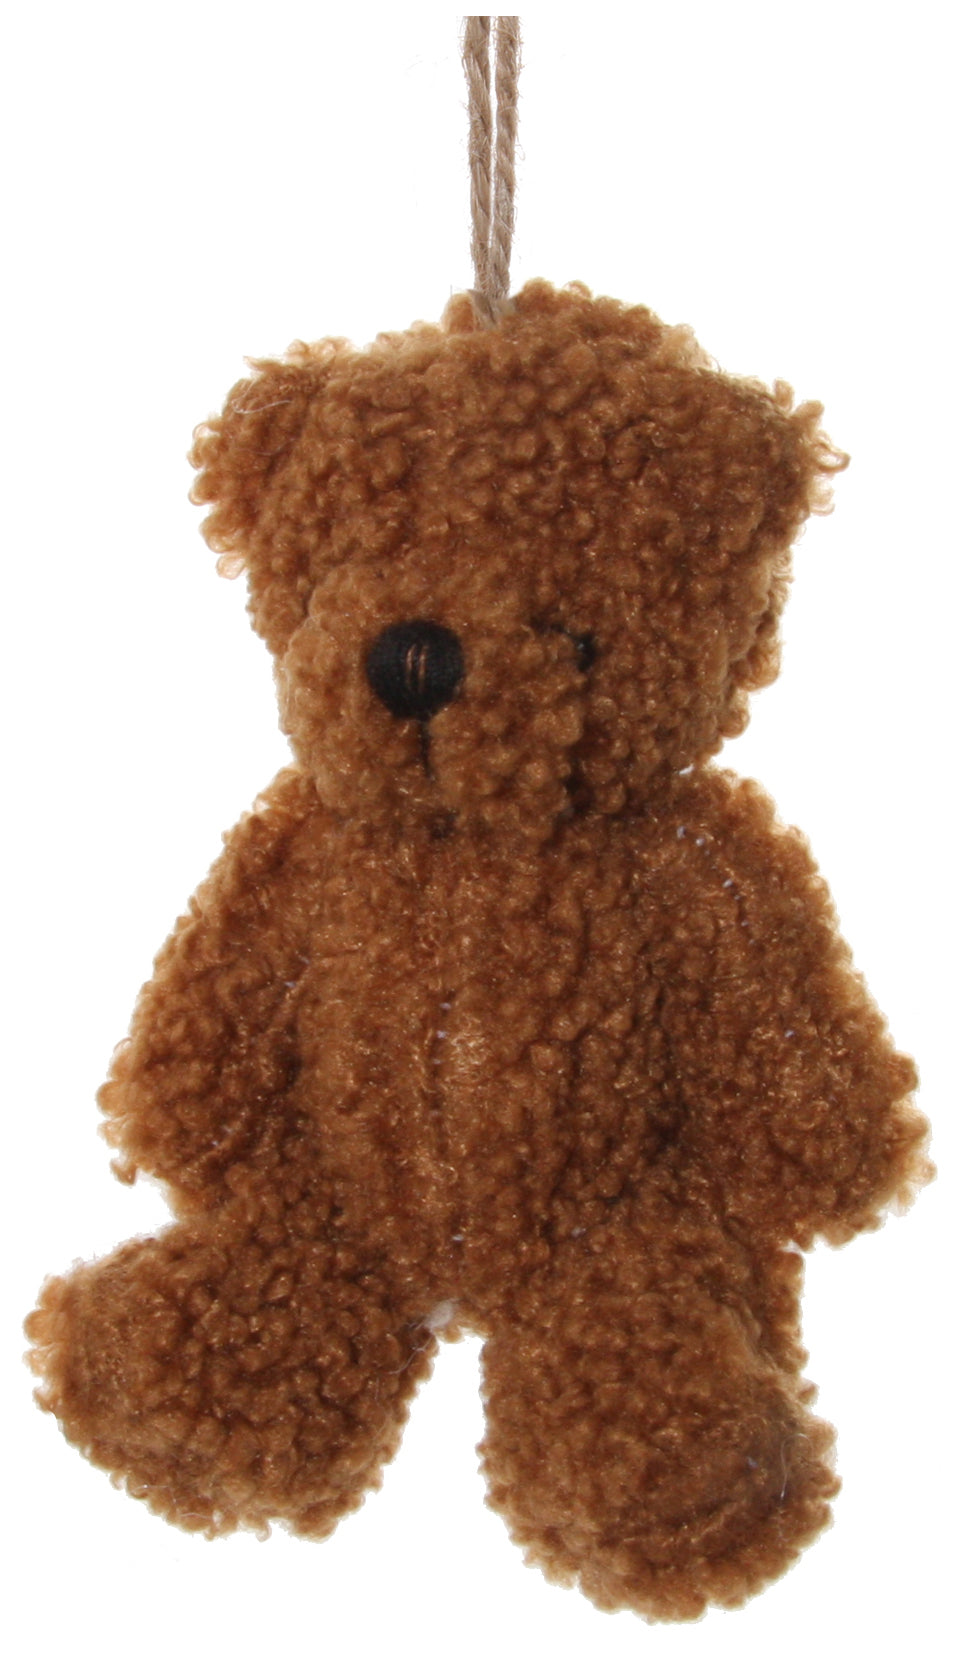 Fuzzy Teddy Bear Ornament